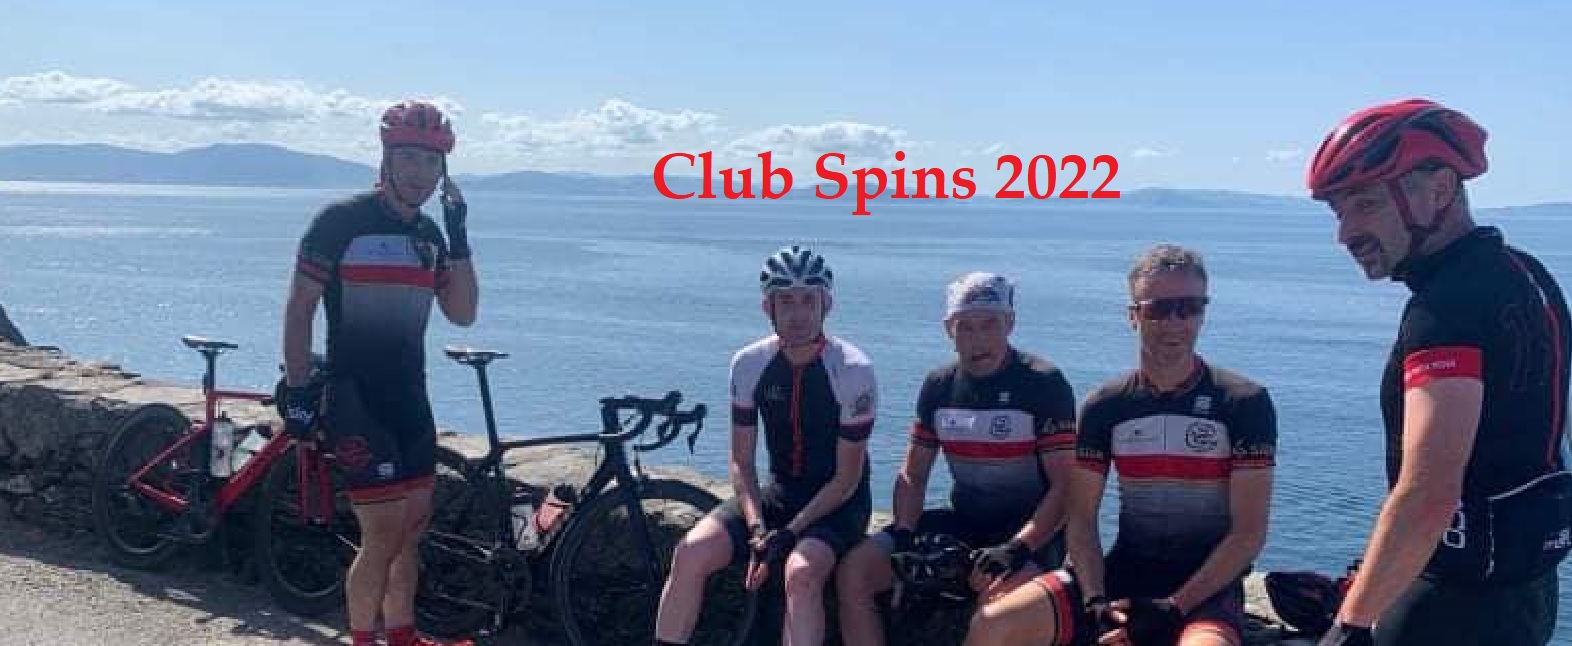 CLUB SPINS 2022 May